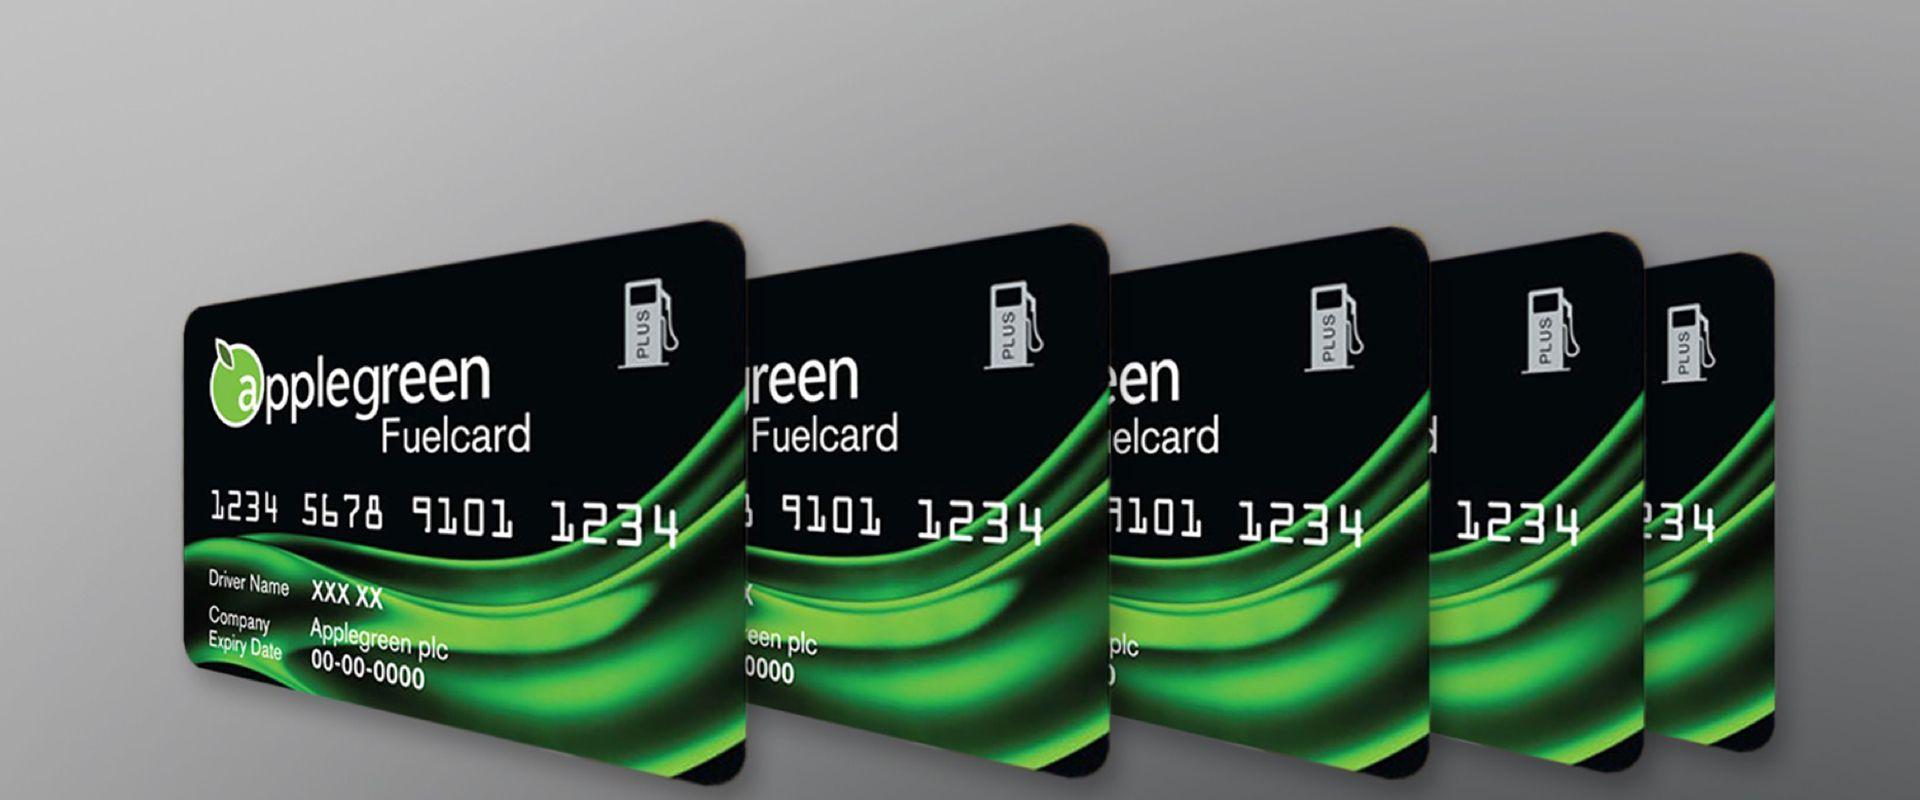 Apple Green Logo - Fuel Card - Applegreen UK